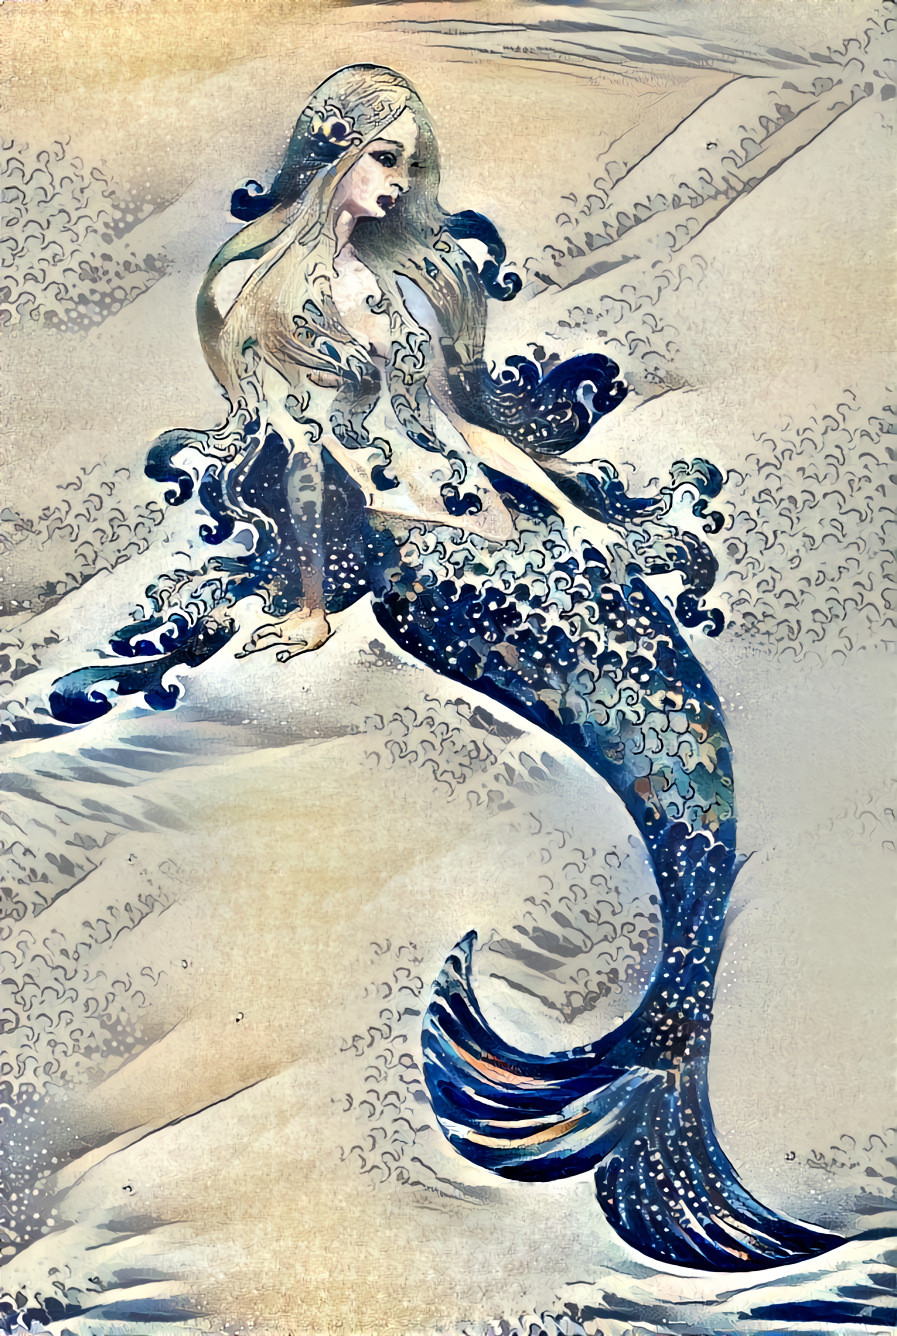 Mermaid - art by A.Petrova (my mother).